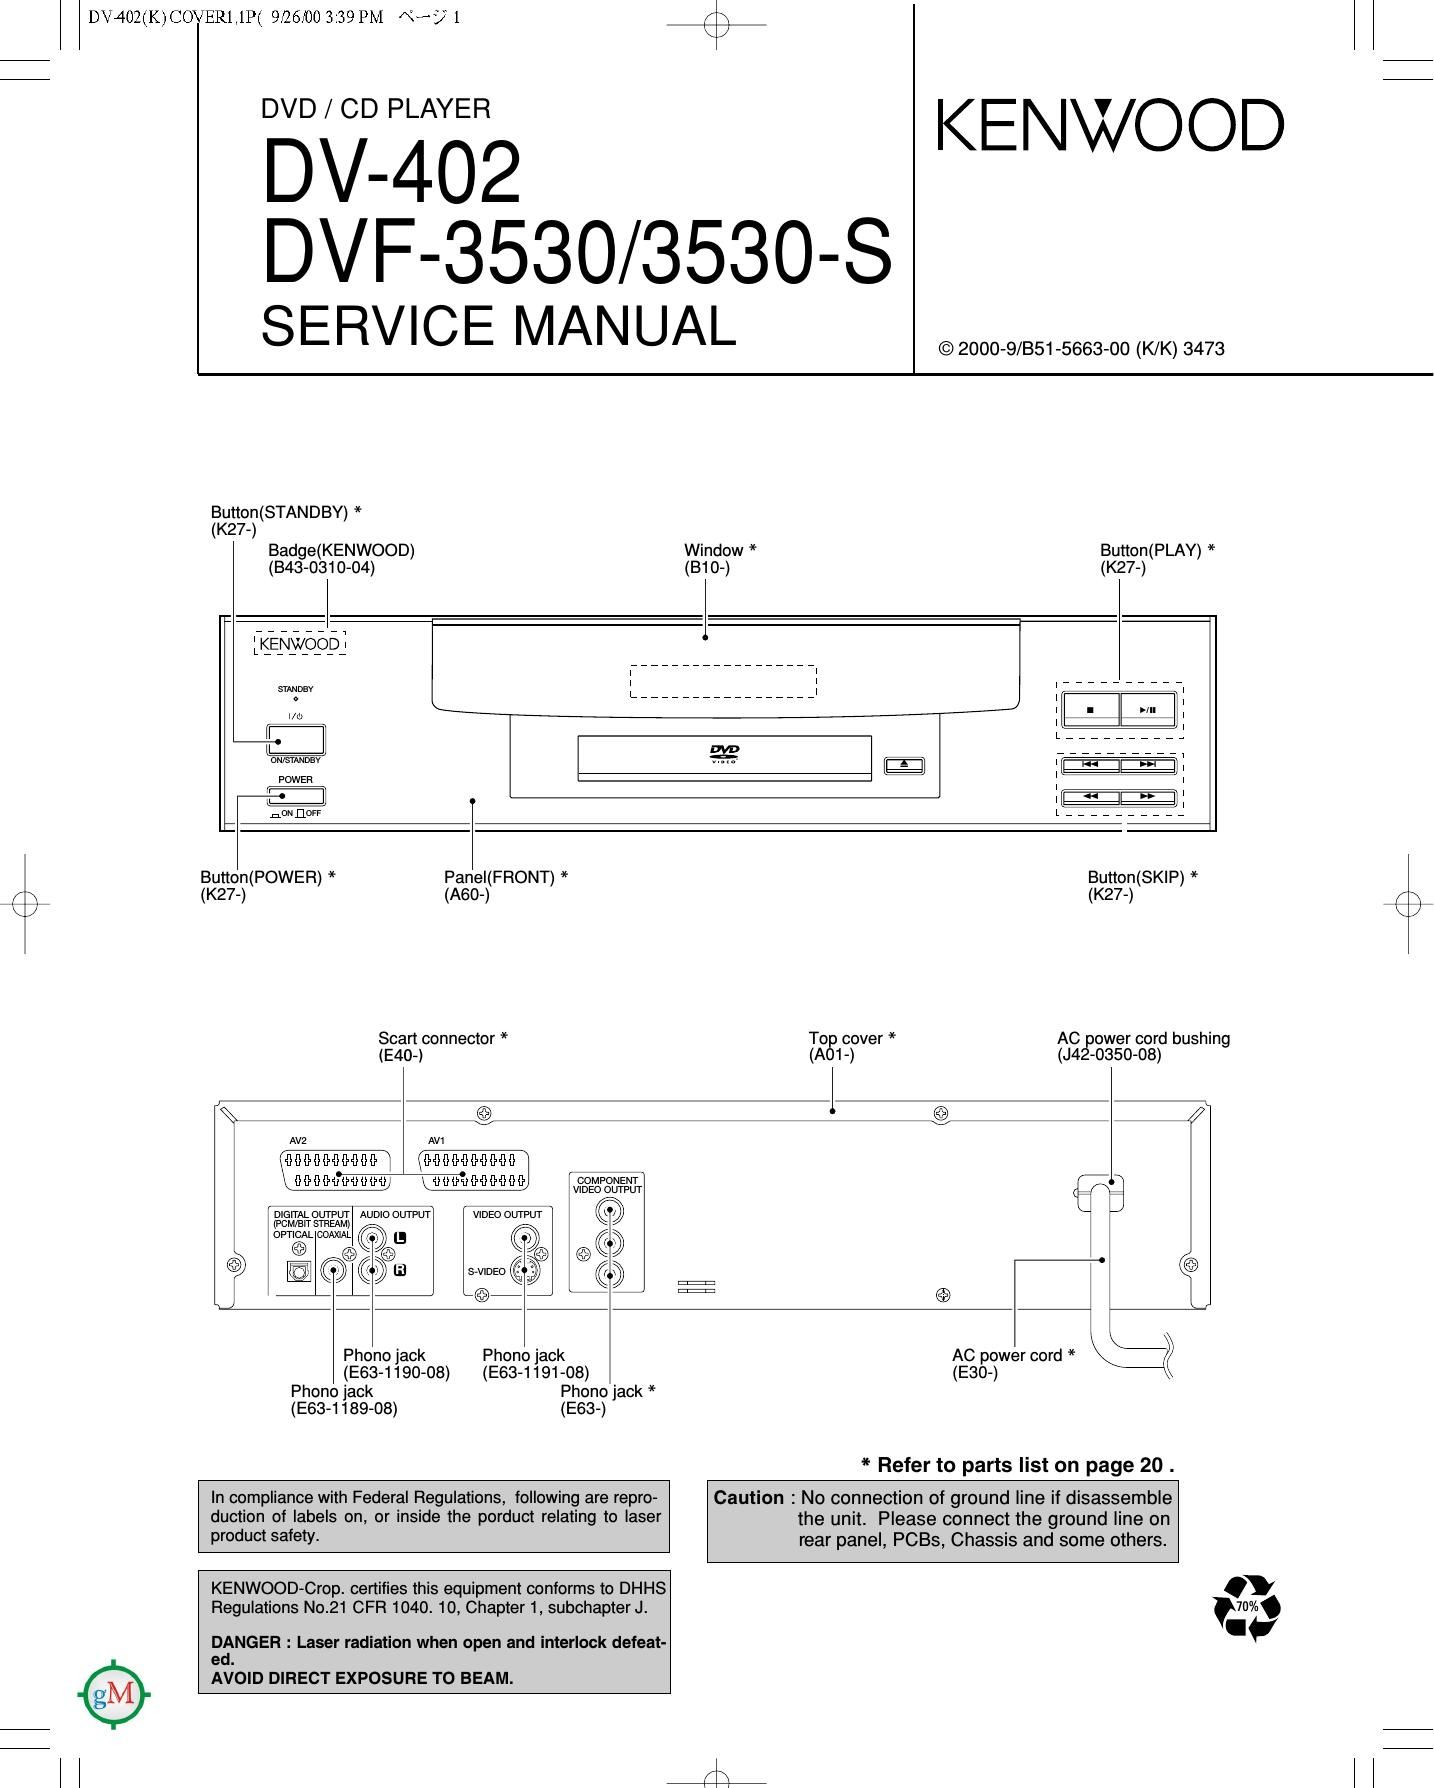 Kenwood DVF 3530 S Service Manual